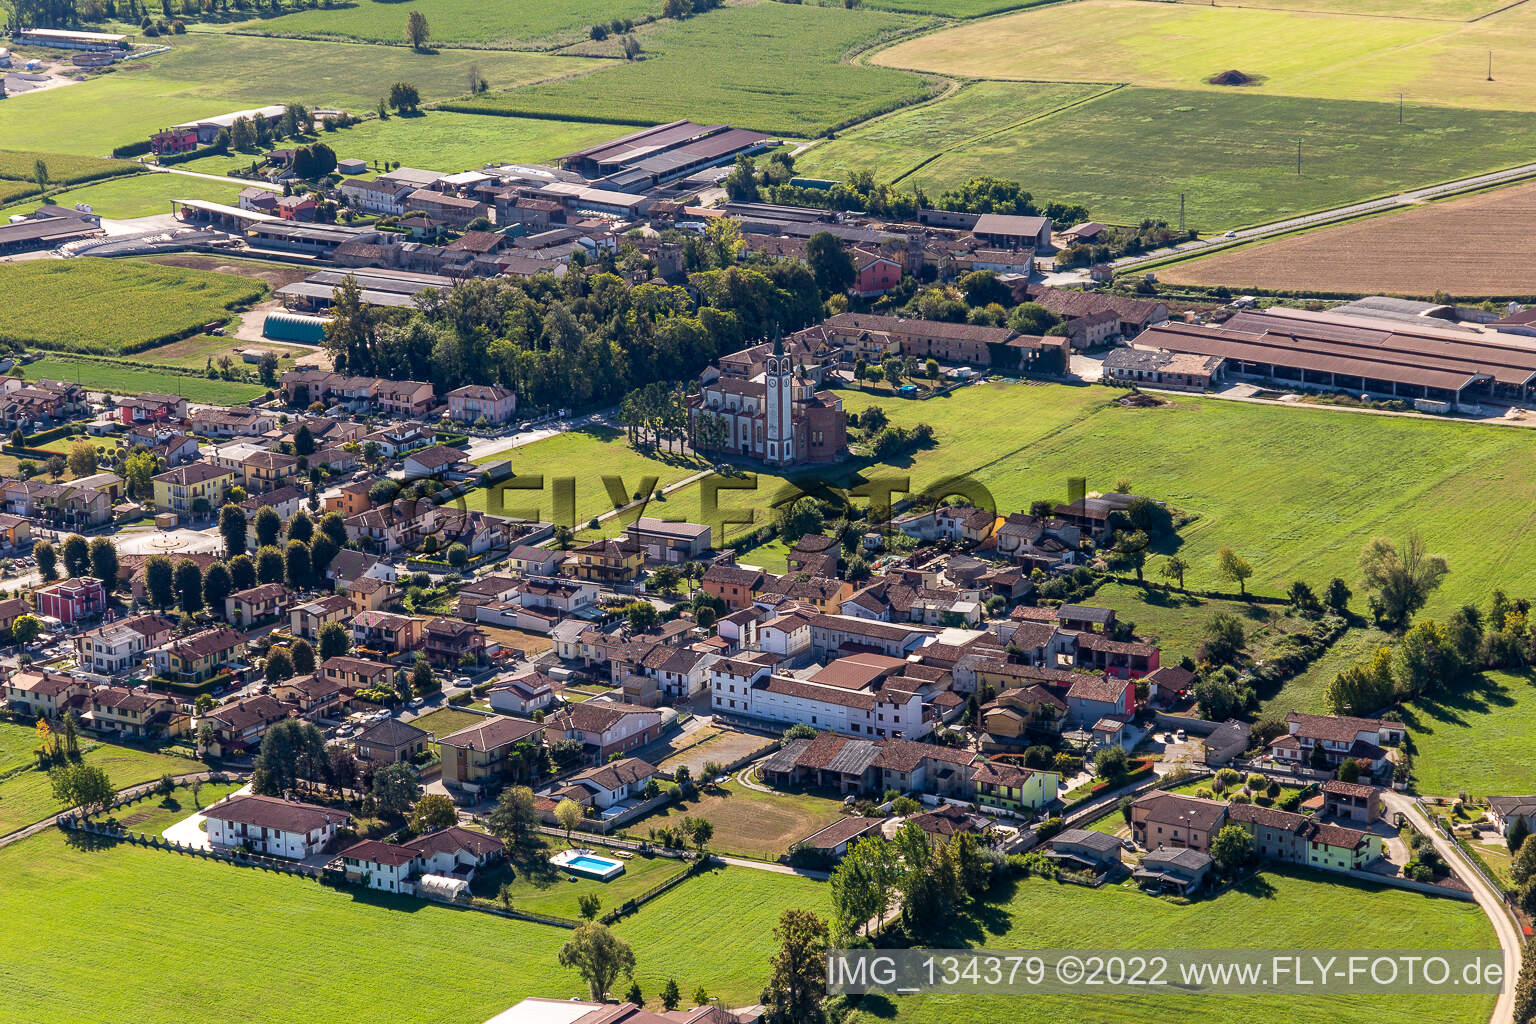 Luftbild von Vidolasco in Casale Cremasco-Vidolasco im Bundesland Cremona, Italien